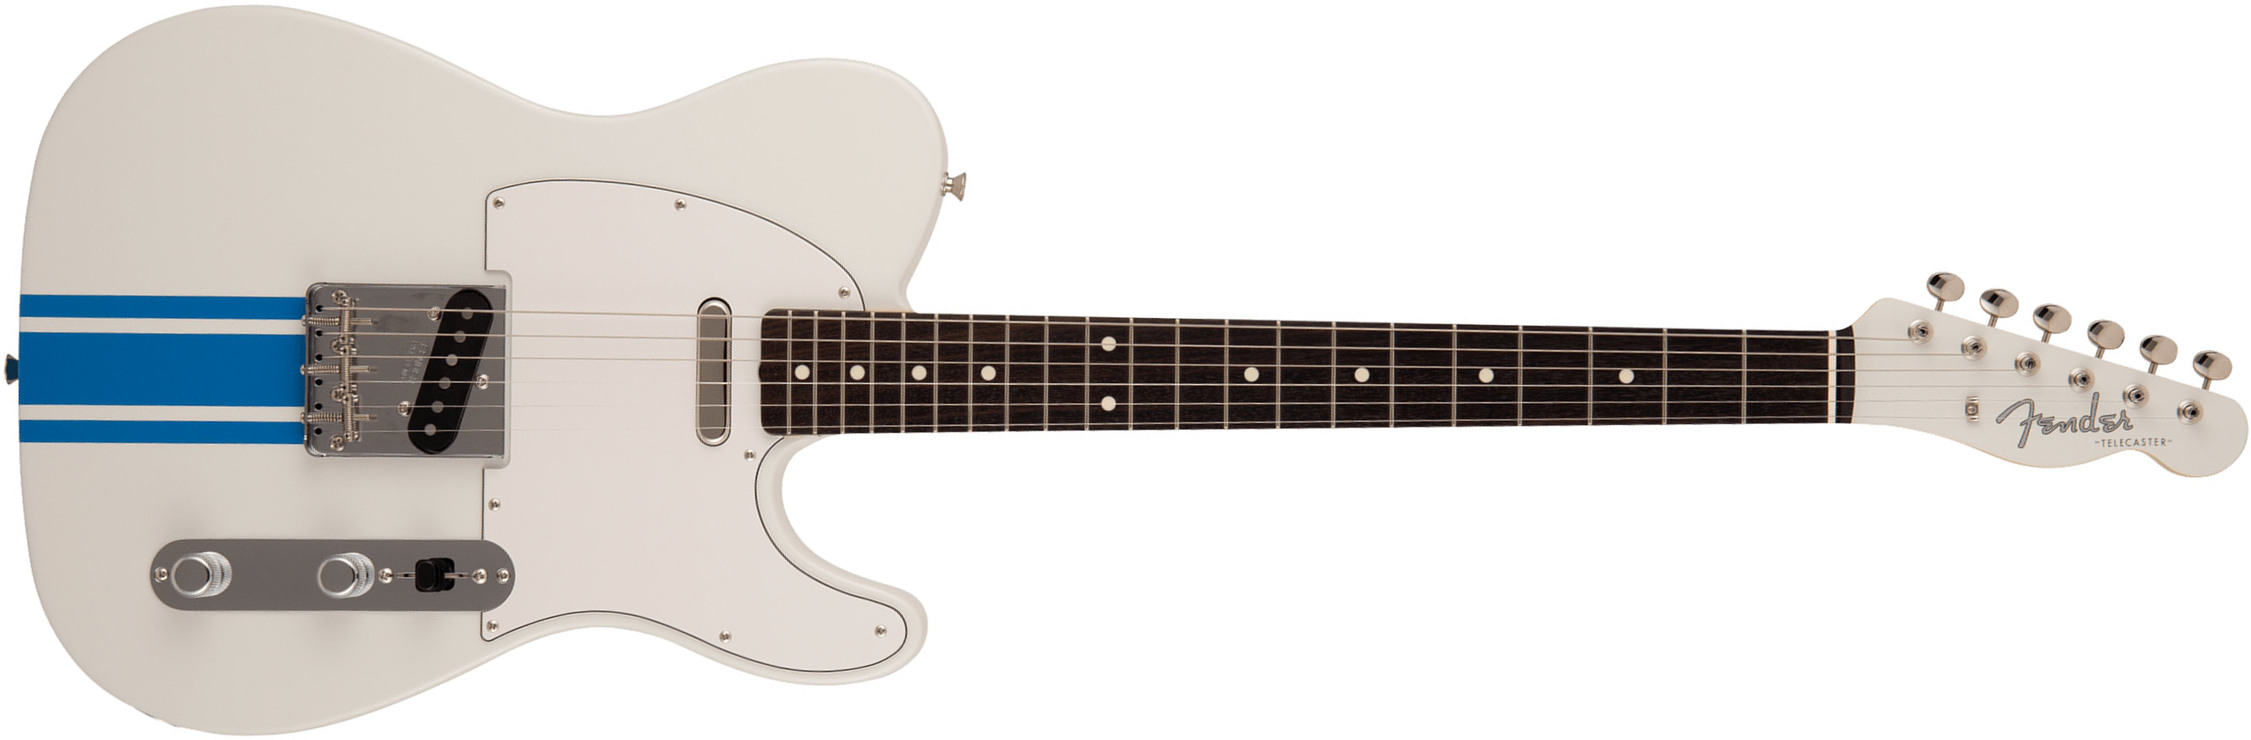 Fender Tele Traditional 60s Mij Jap 2s Ht Rw - Olympic White W/ Blue Competition Stripe - Guitarra eléctrica con forma de tel - Main picture